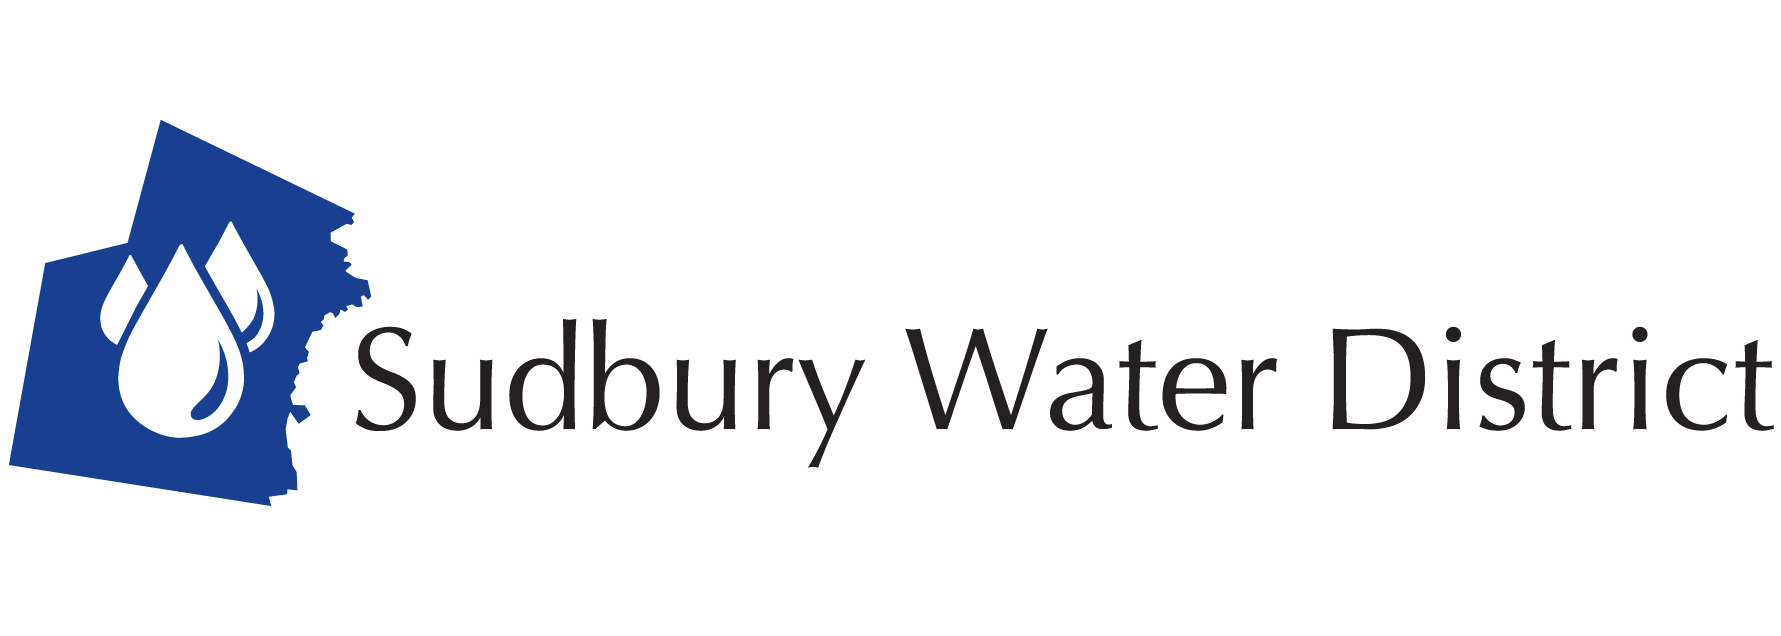 Sudbury Water District